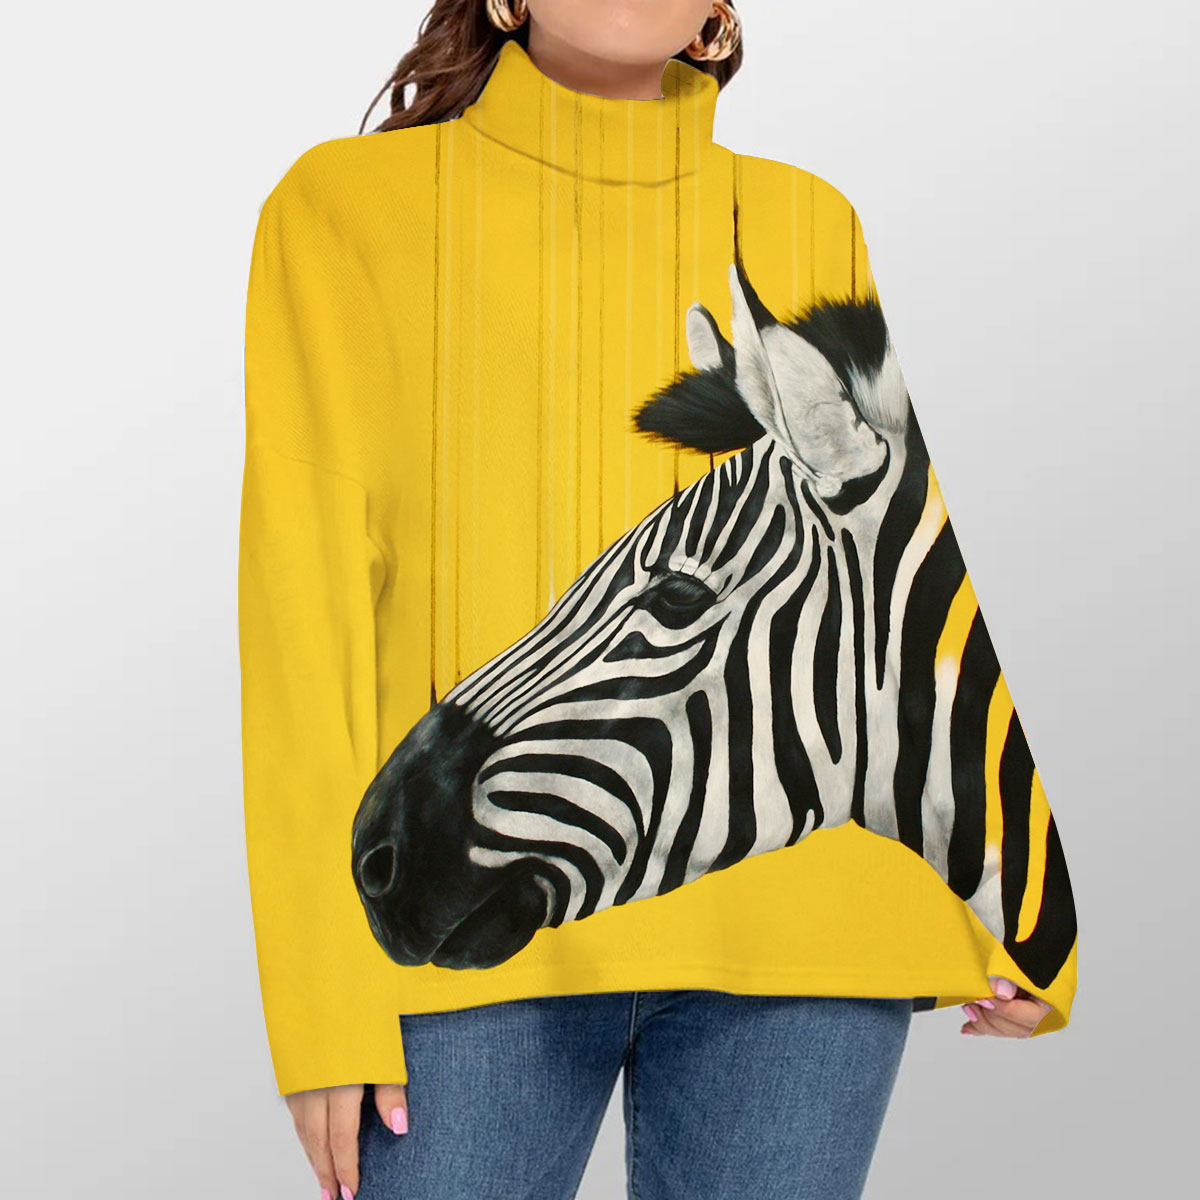 Zebra Abstract Turtleneck Sweater_1_2.1